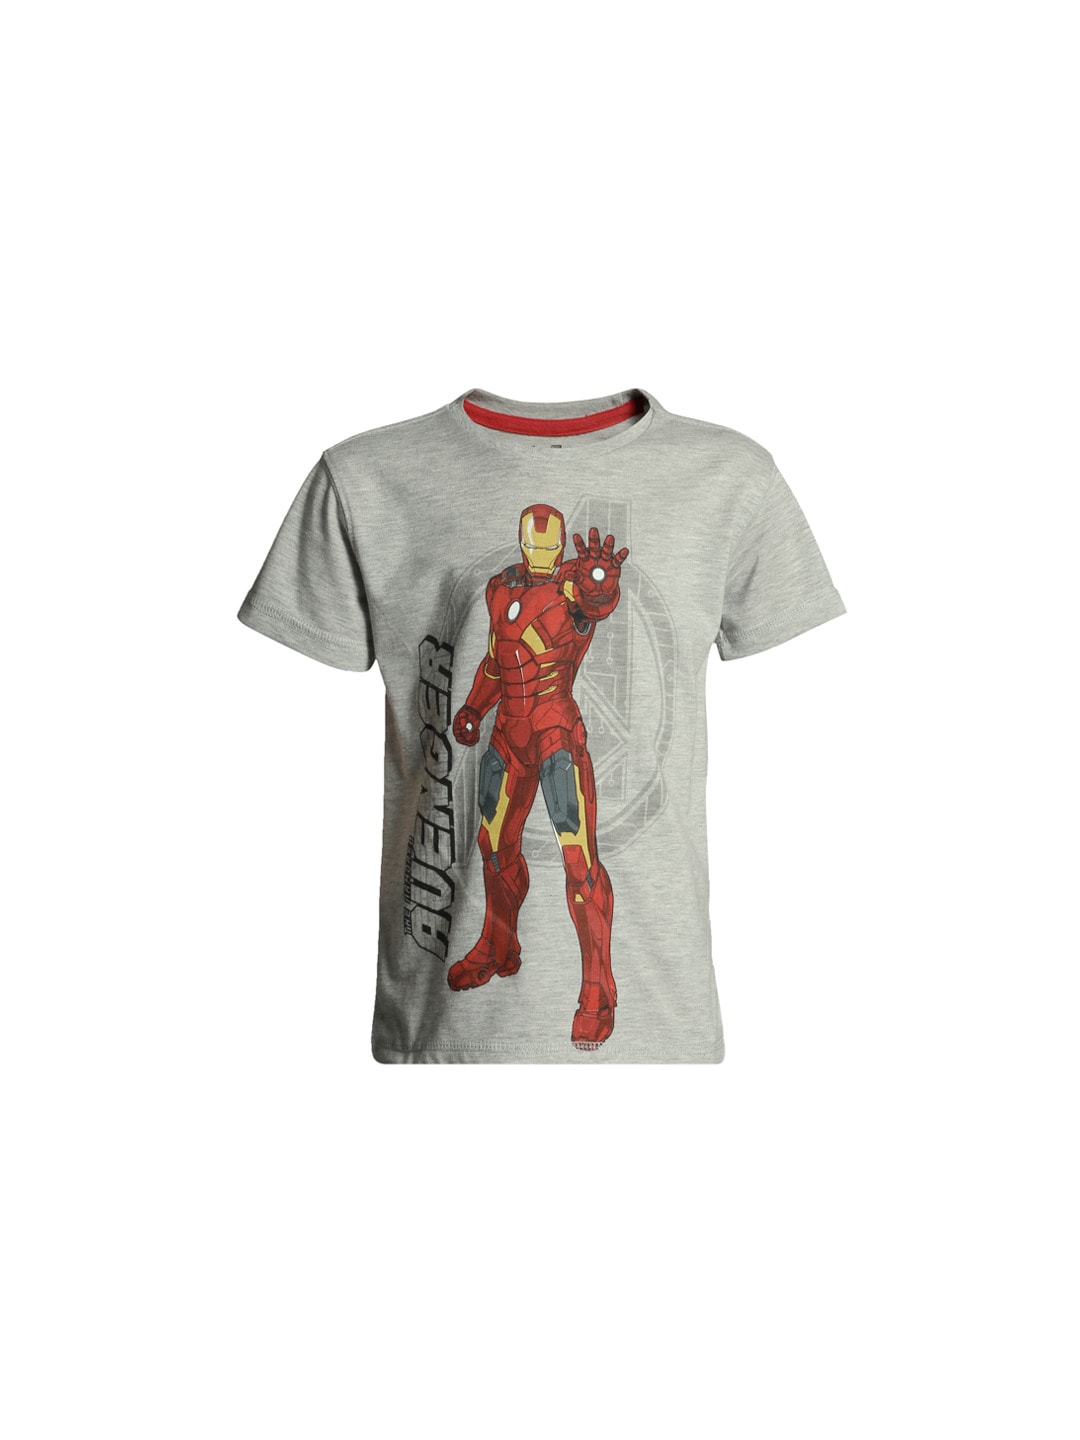 Avengers Boys Grey Printed T-shirt